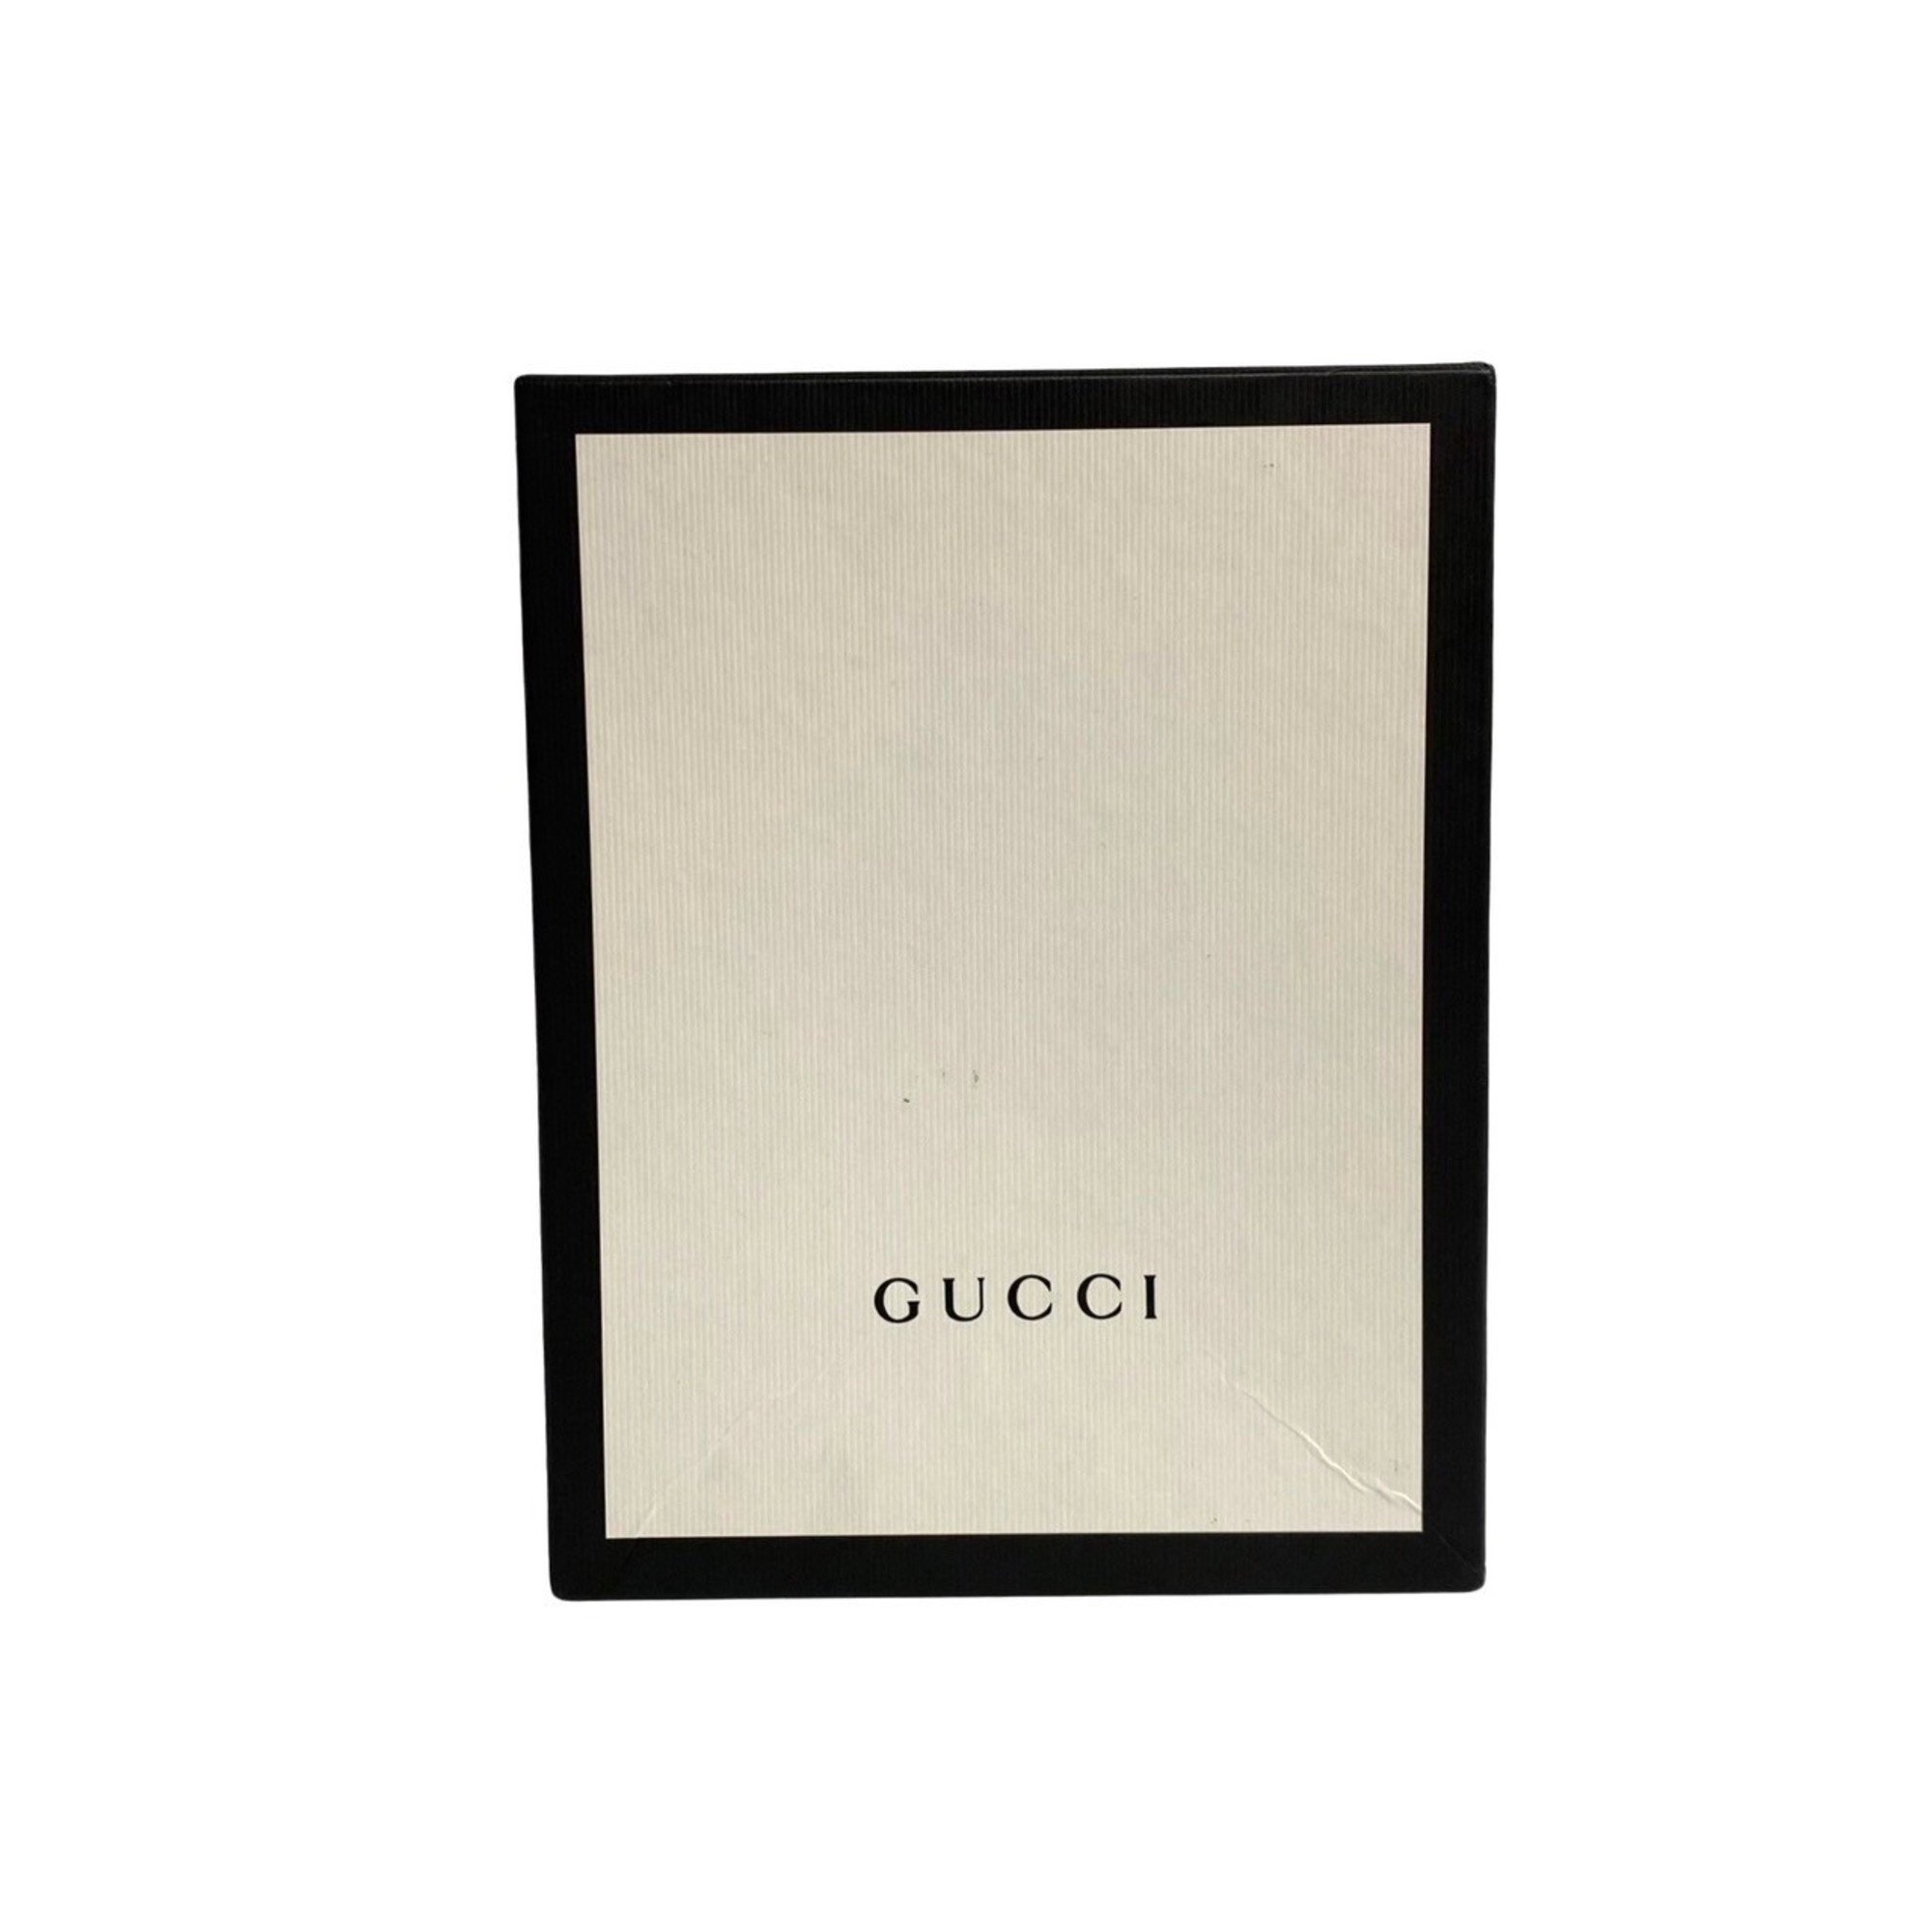 GUCCI Gucci Dionysus Super Bag GG Supreme Leather Shoulder Brown 27271